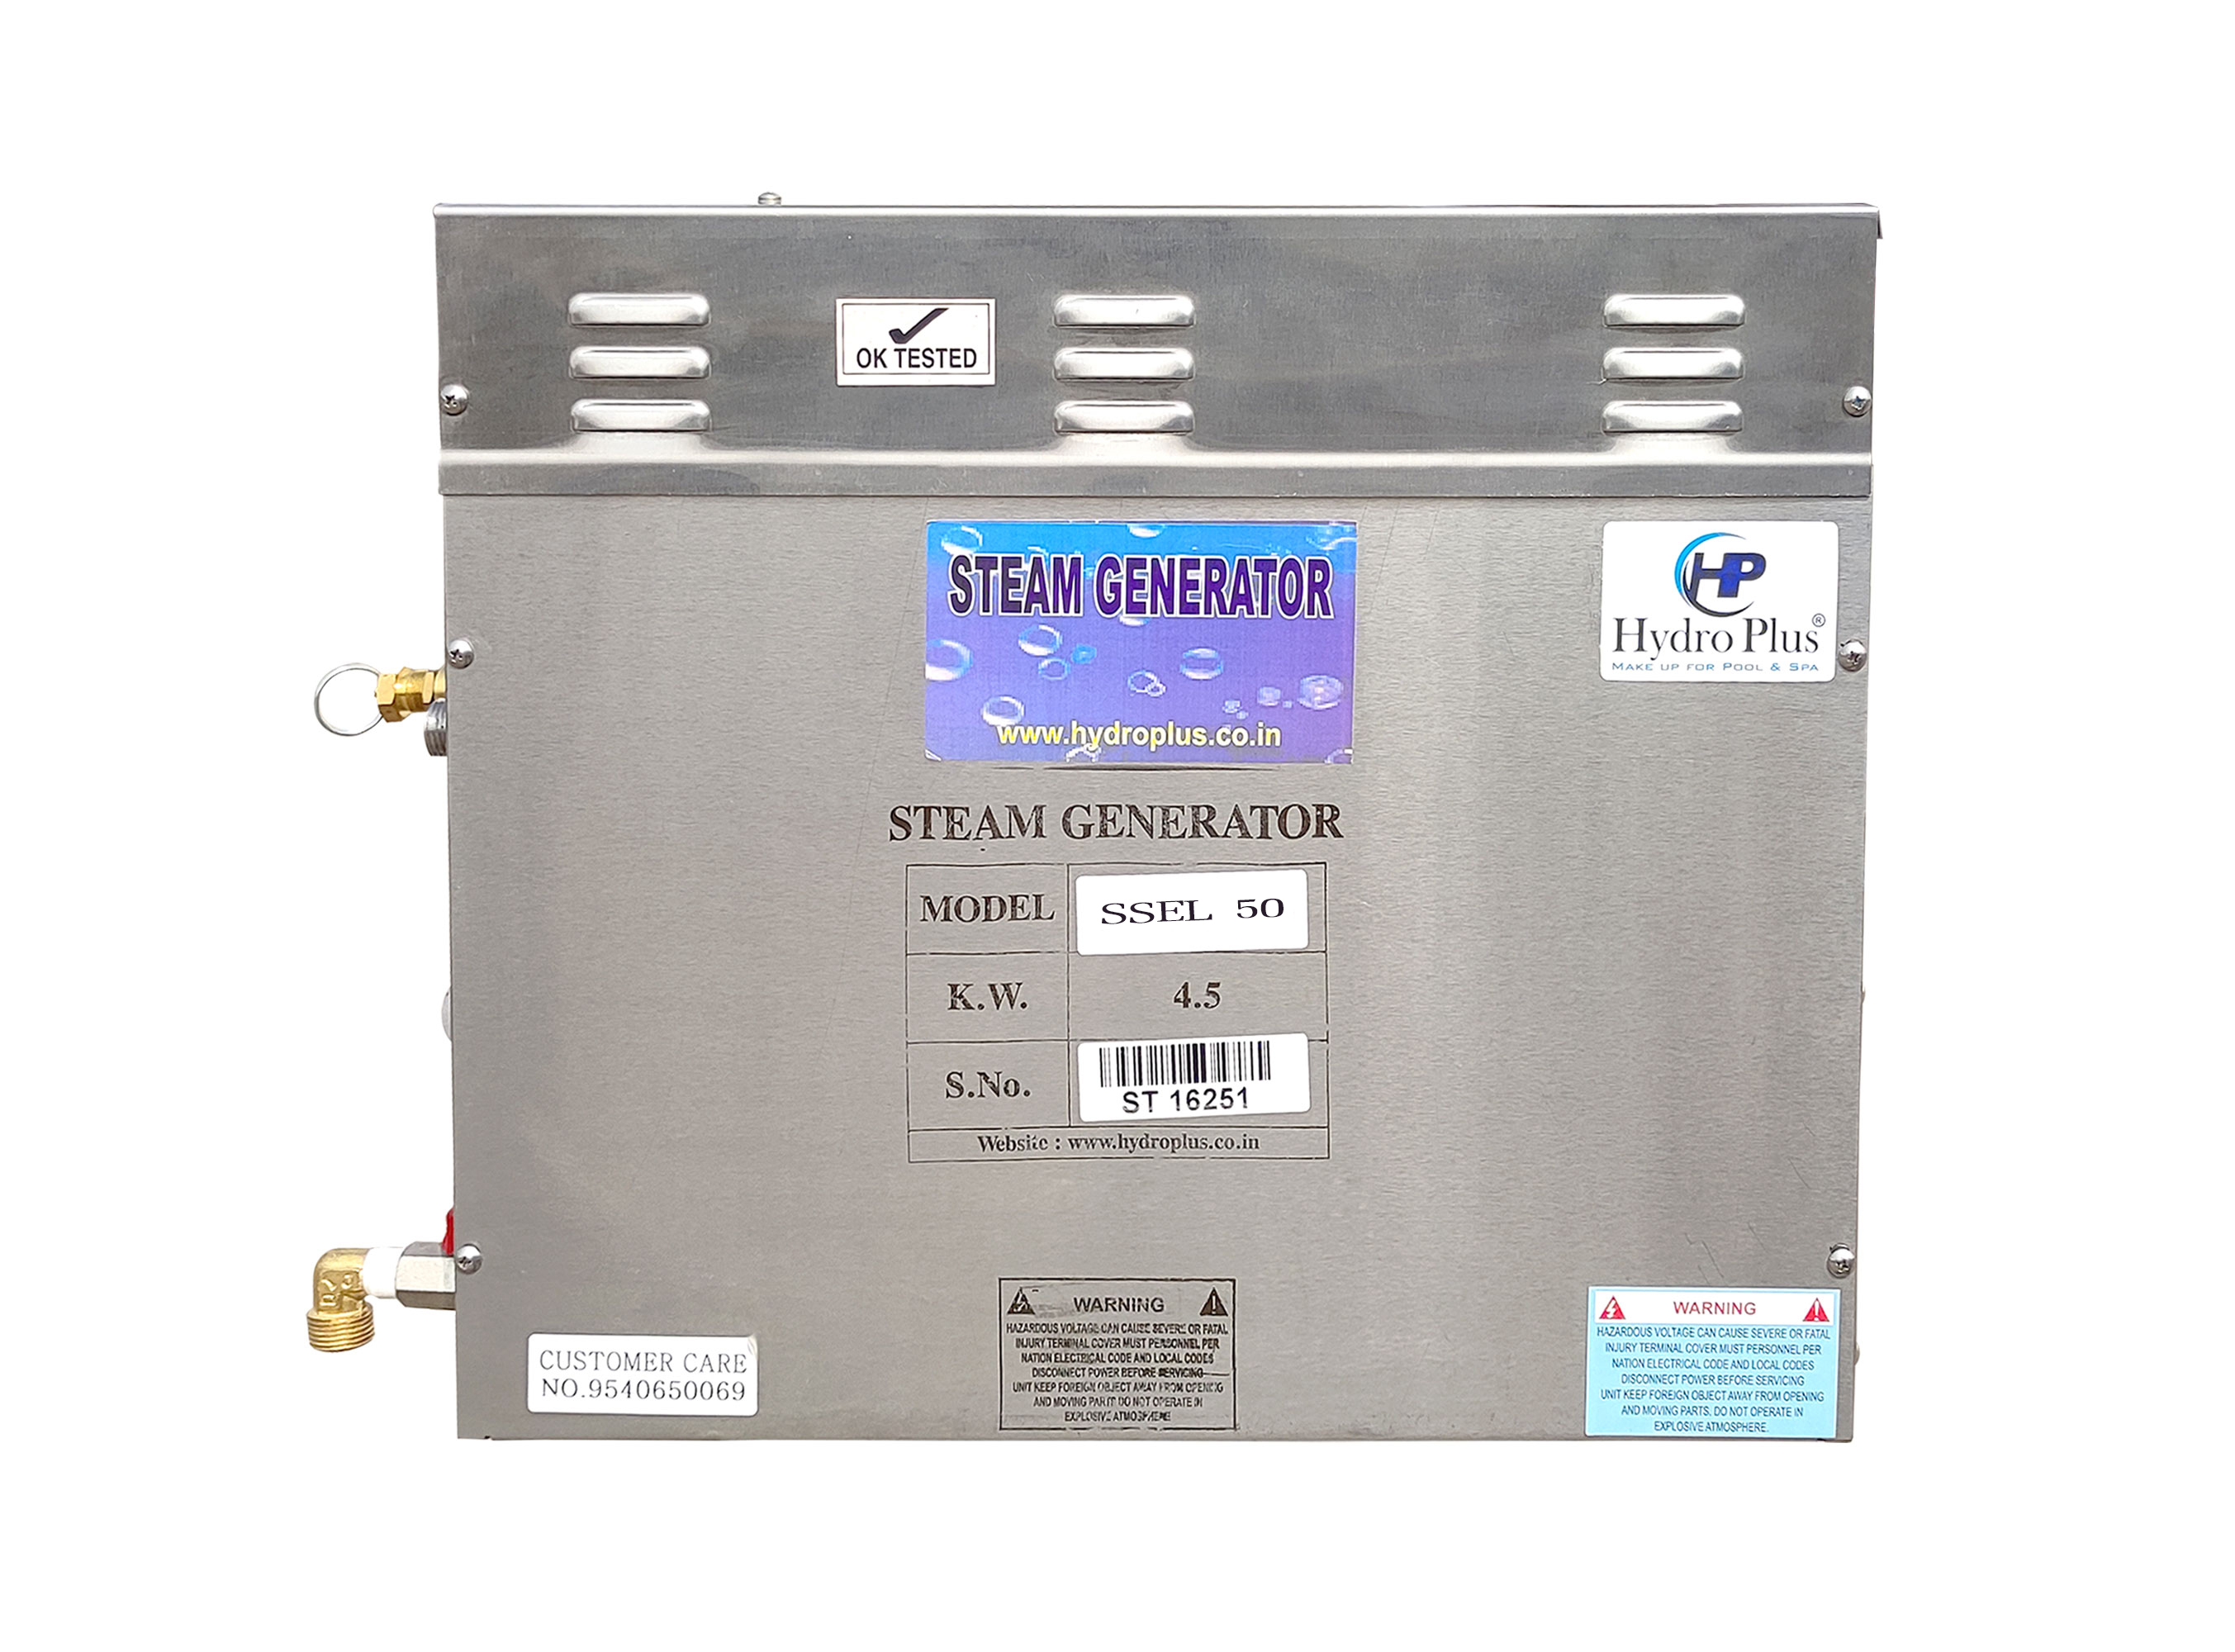 Steam Generator SSEL-50